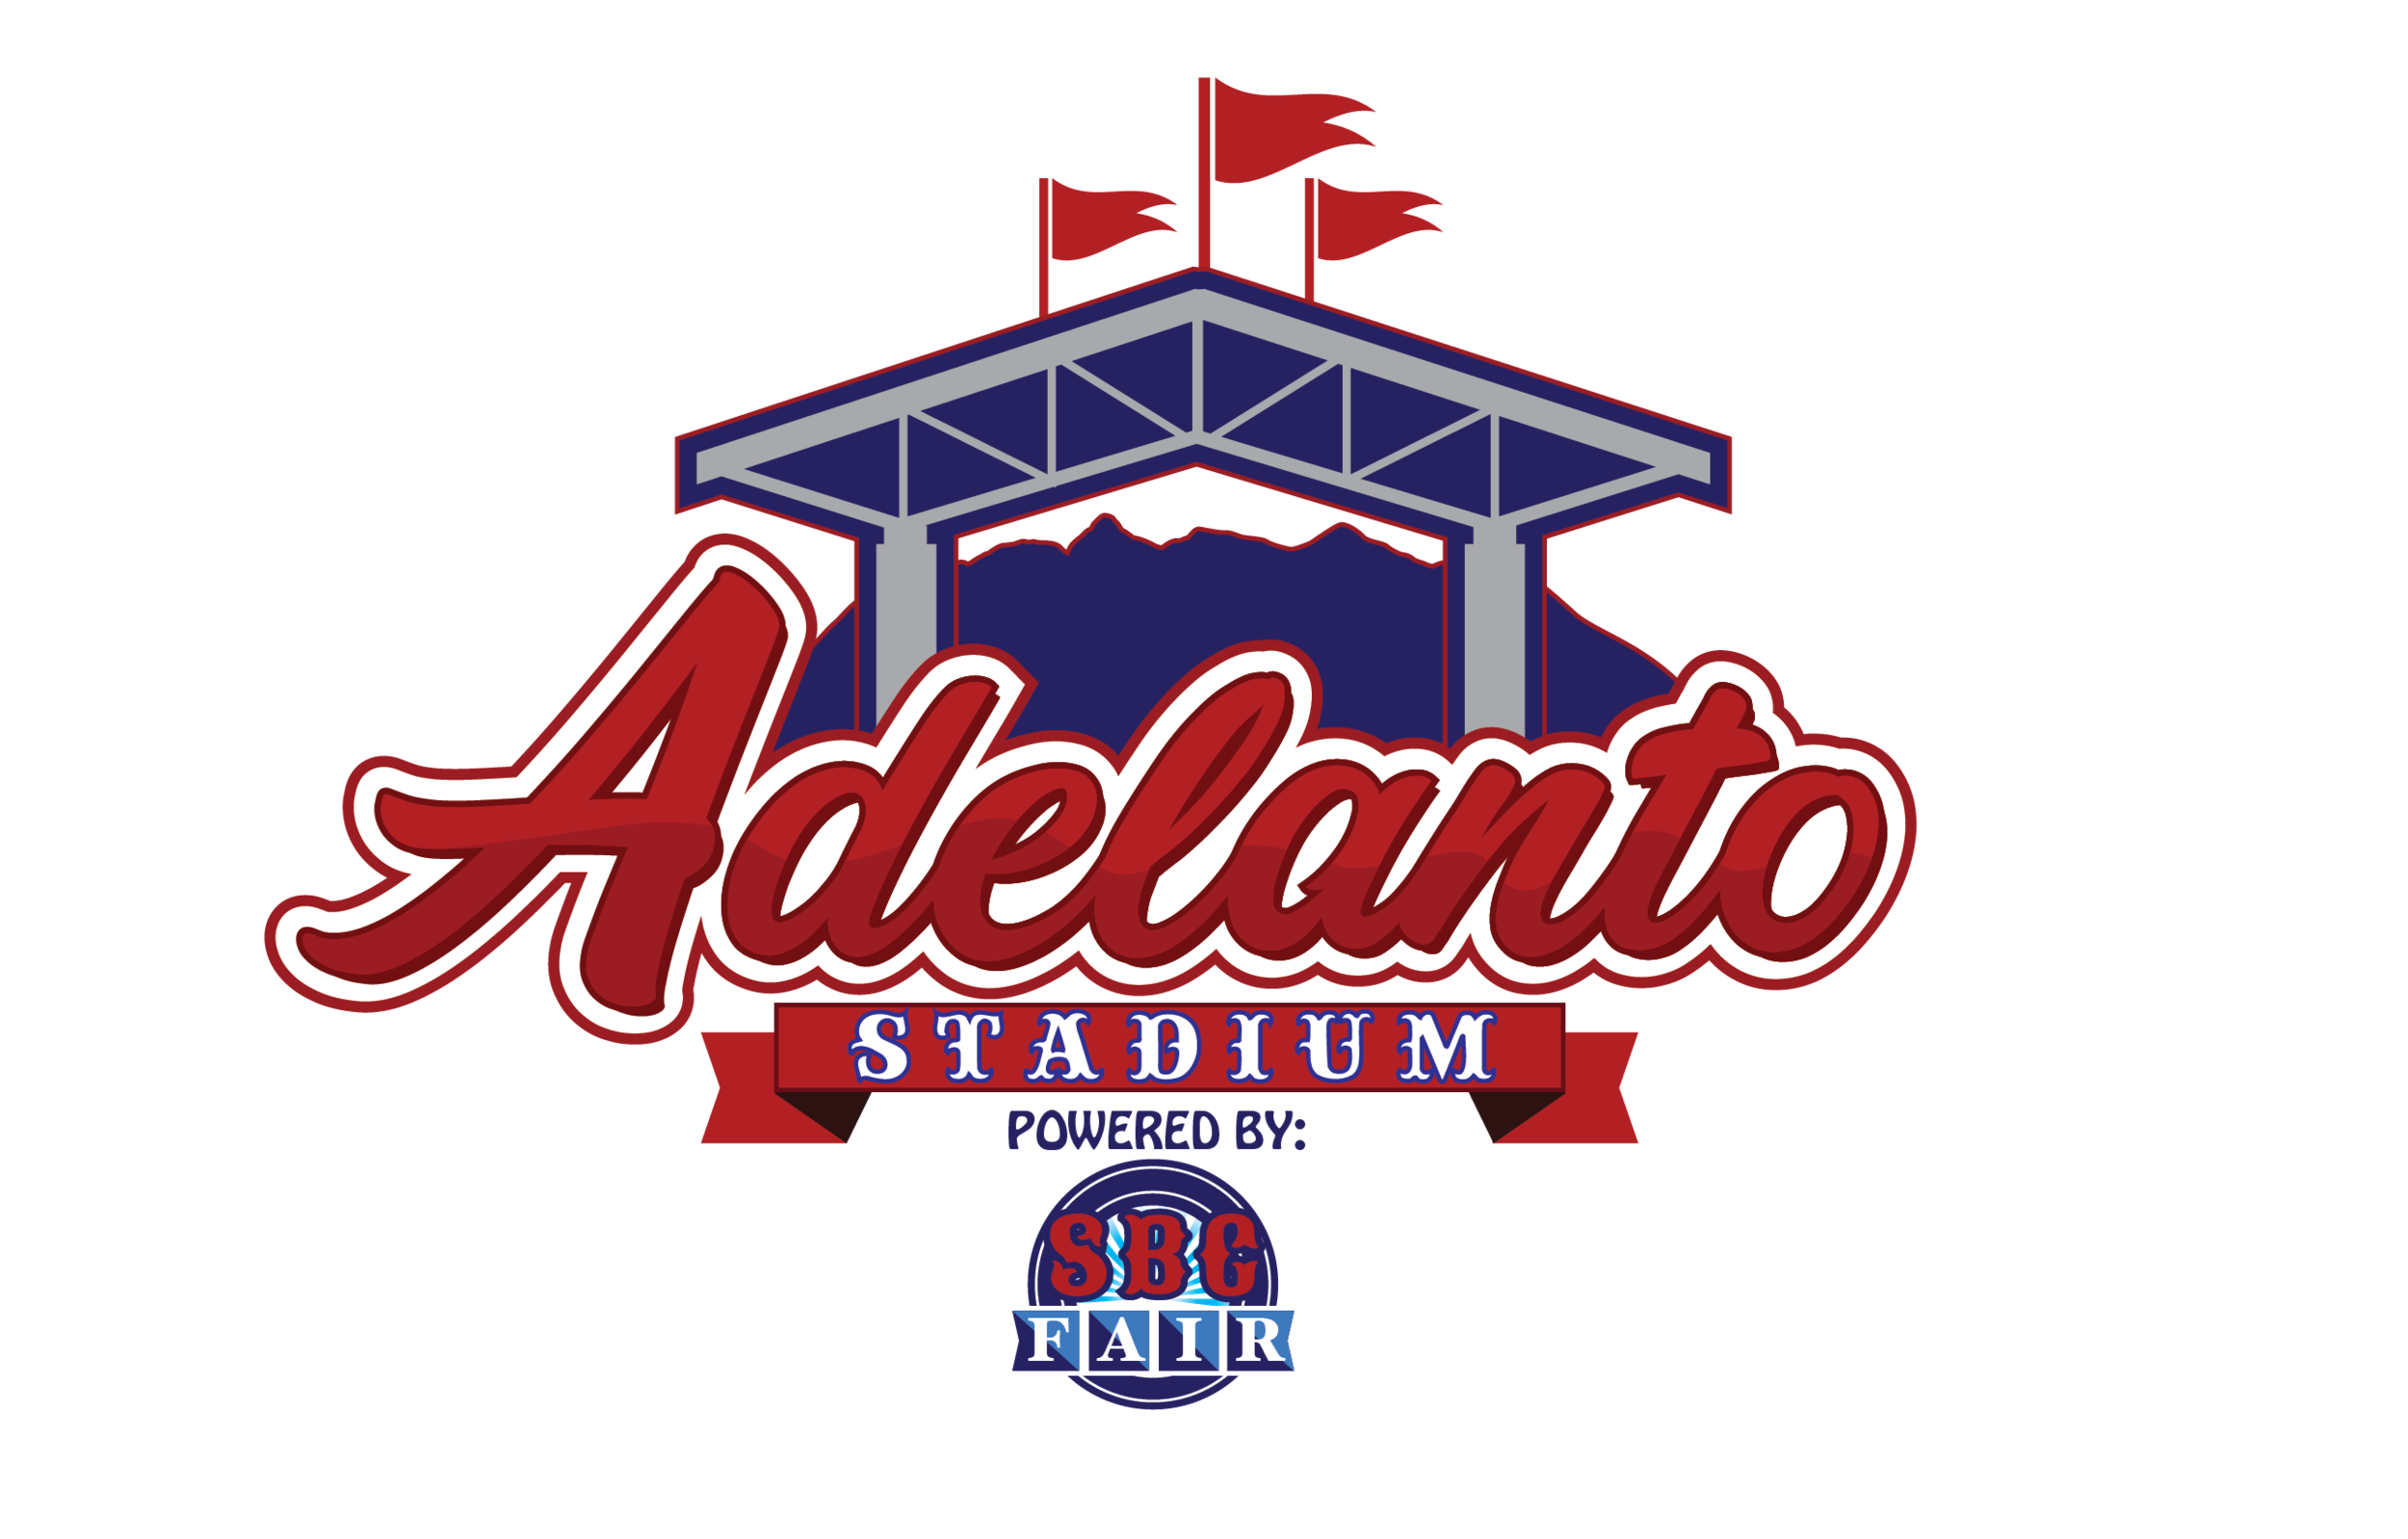 adelanto stadium by SBC.png